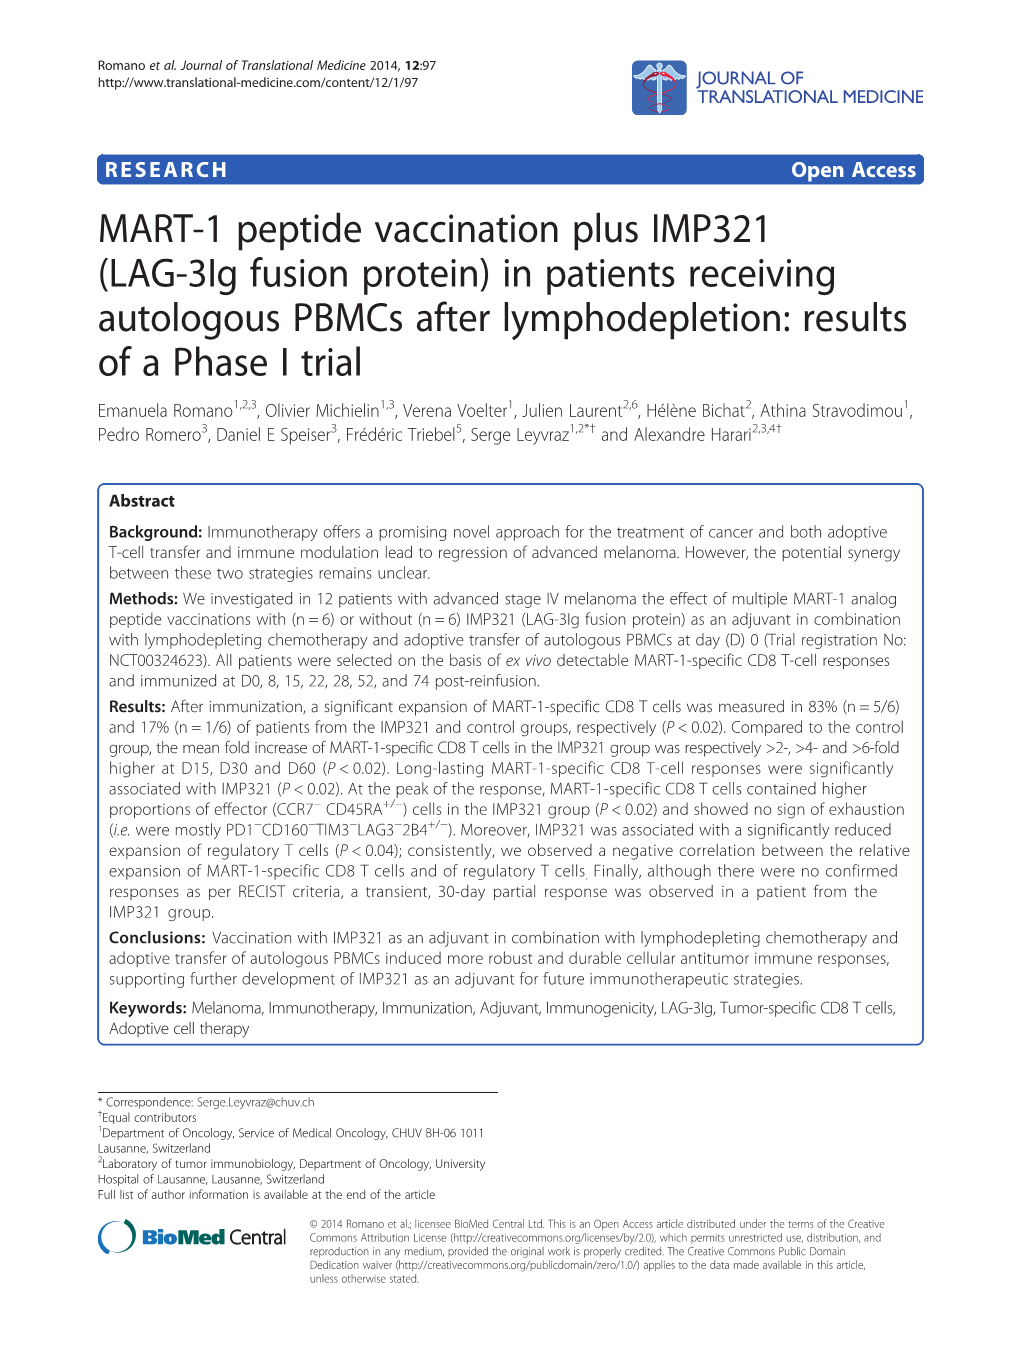 MART-1 Peptide Vaccination Plus